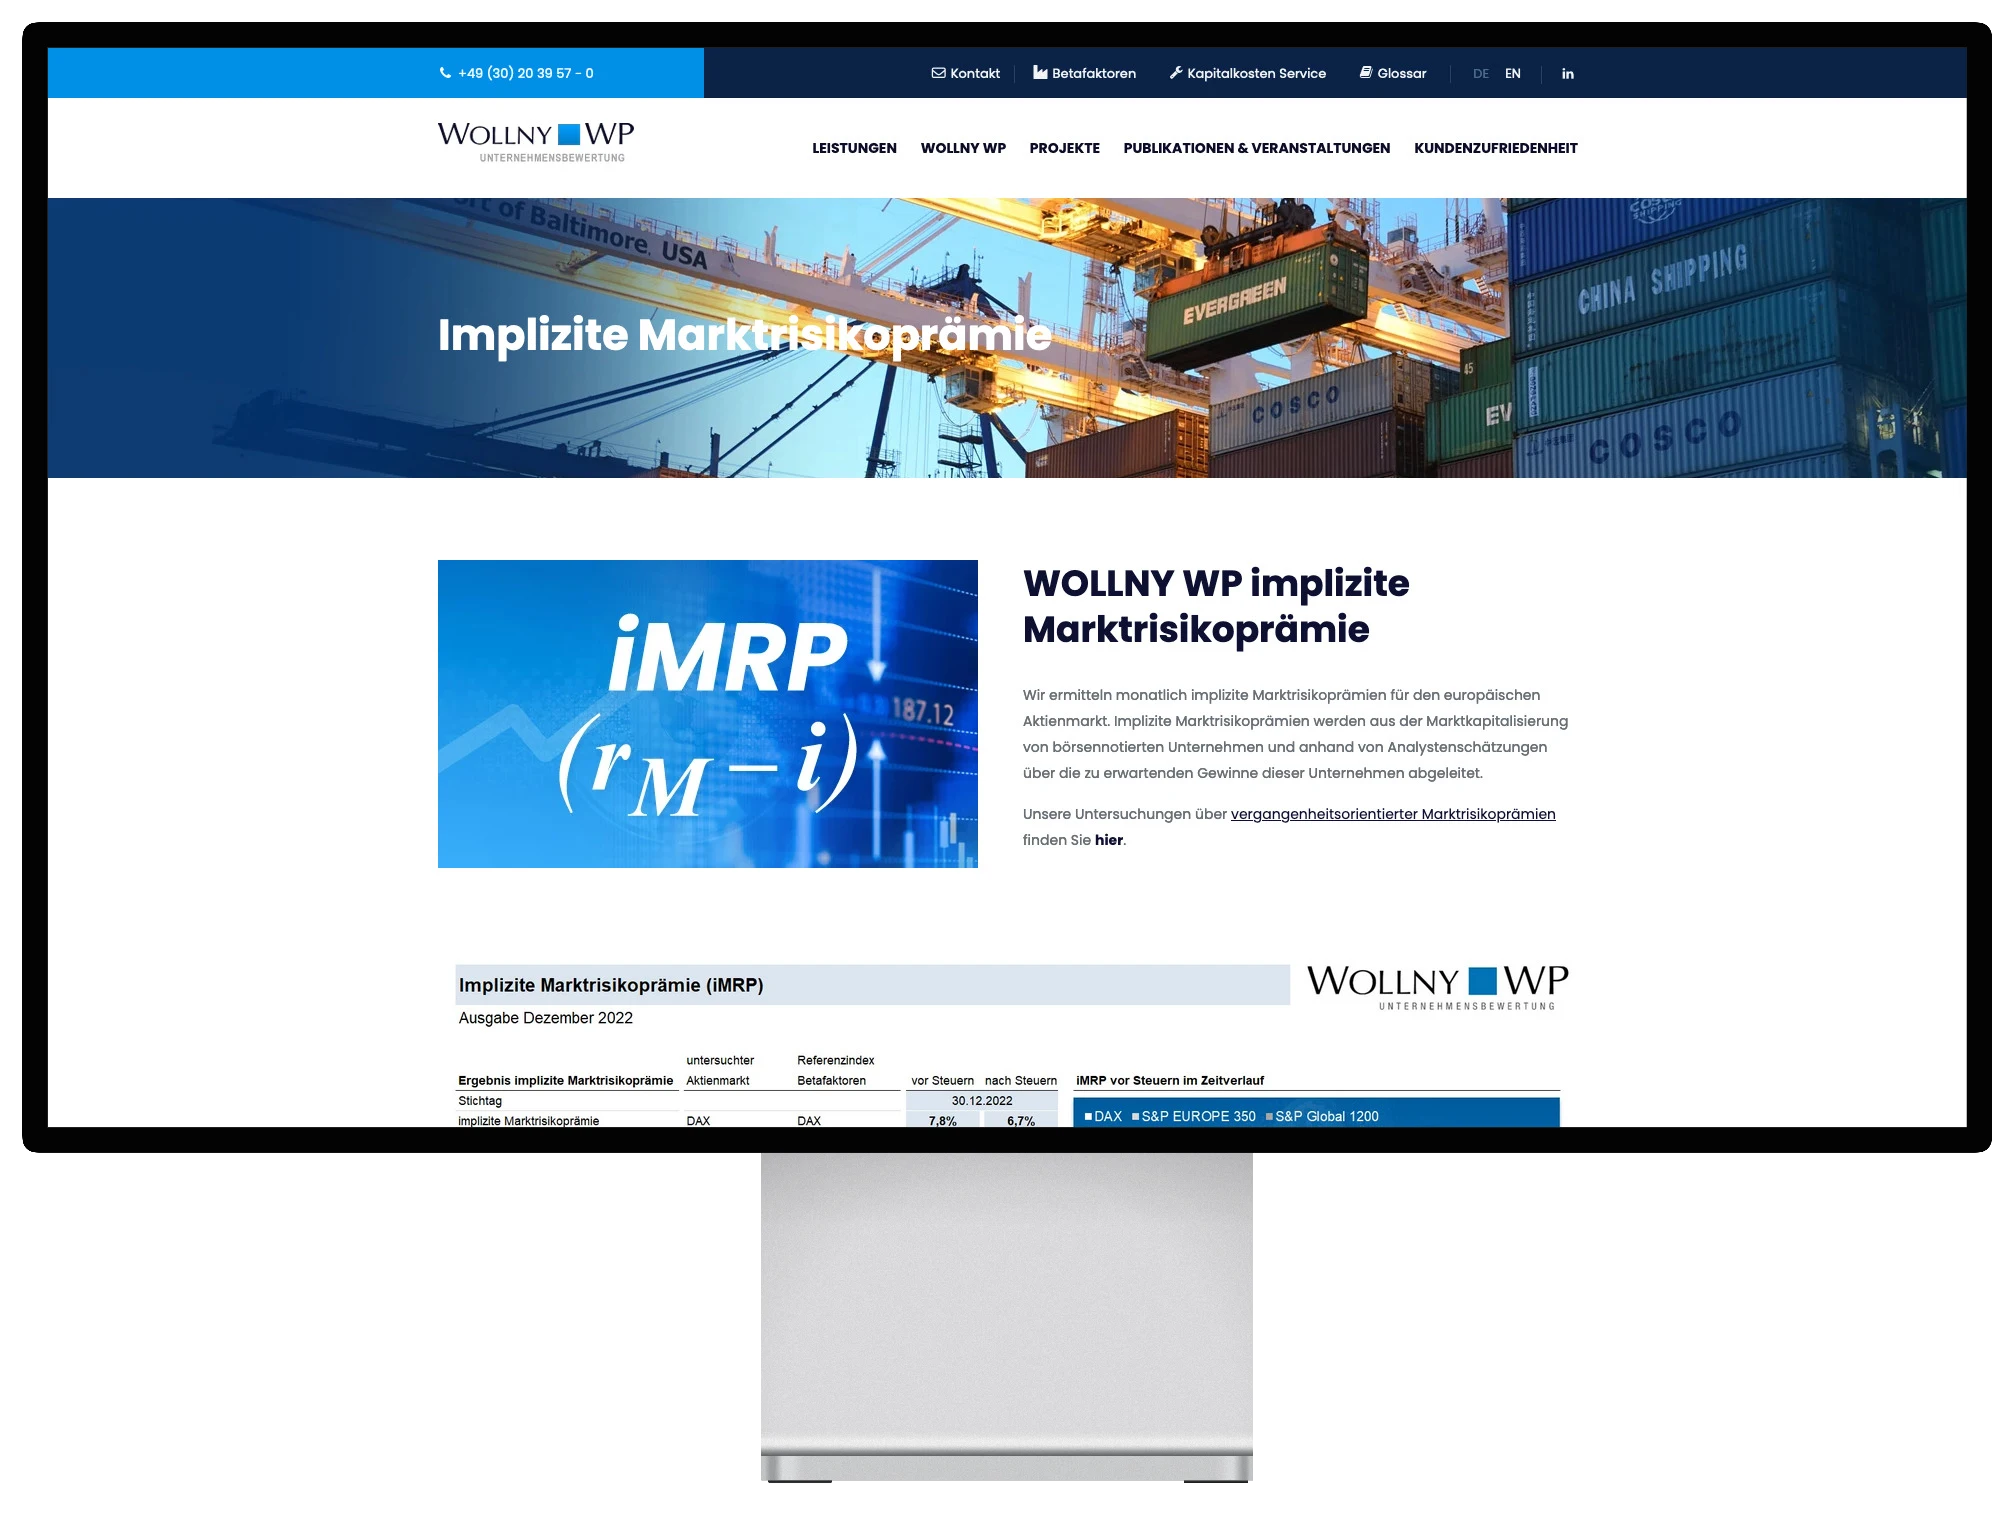 Webite Unternehmensbewertung WOLLNY WP GmbH, Berlin implizite Marktrisikoprämie